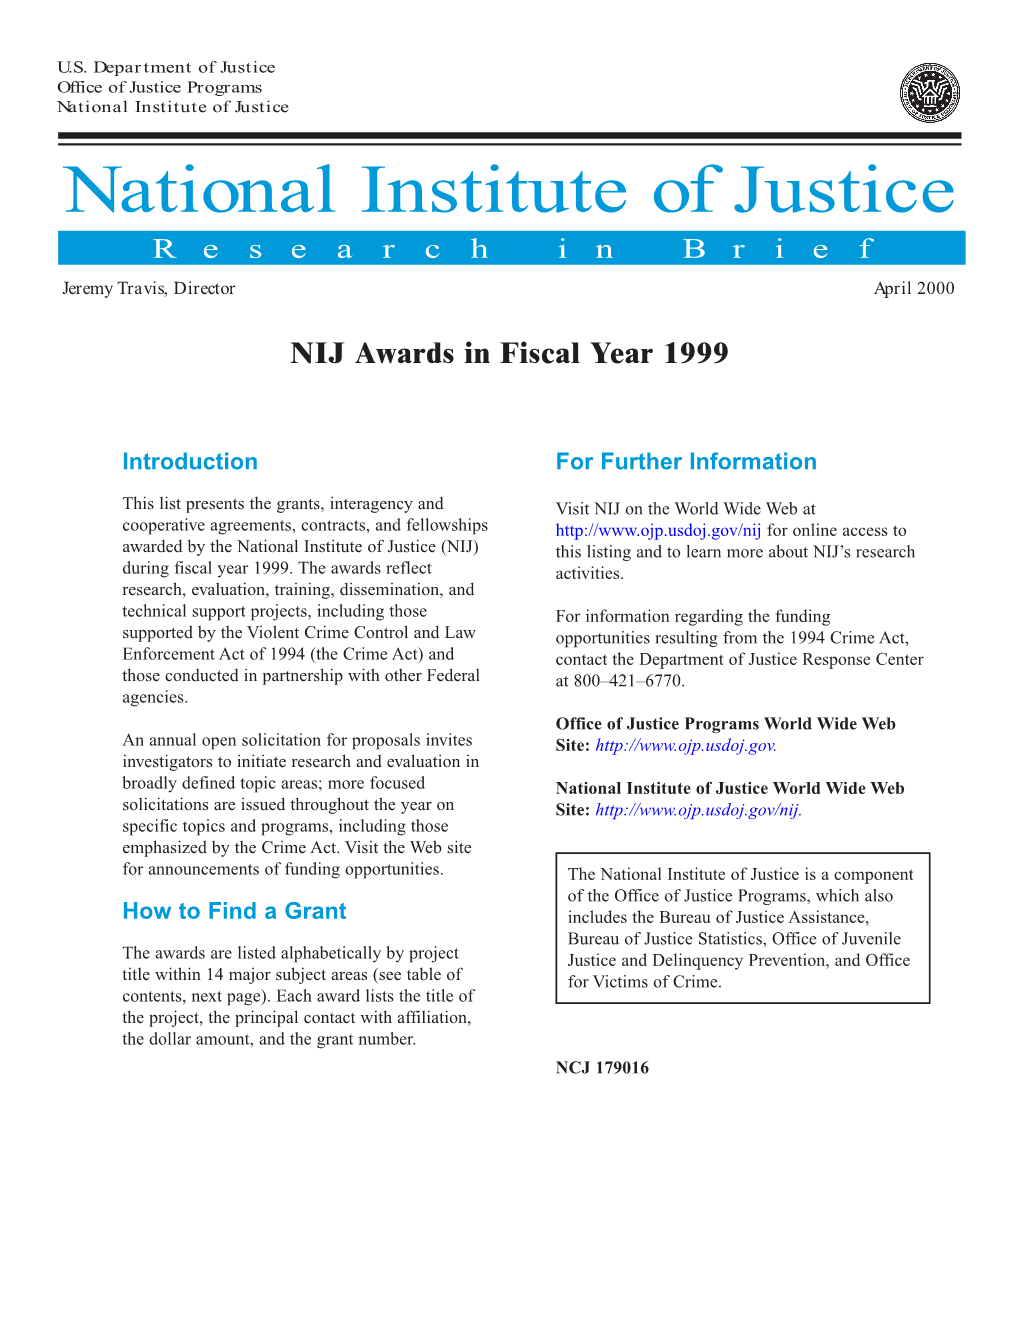 NIJ Awards in Fiscal Year 1999